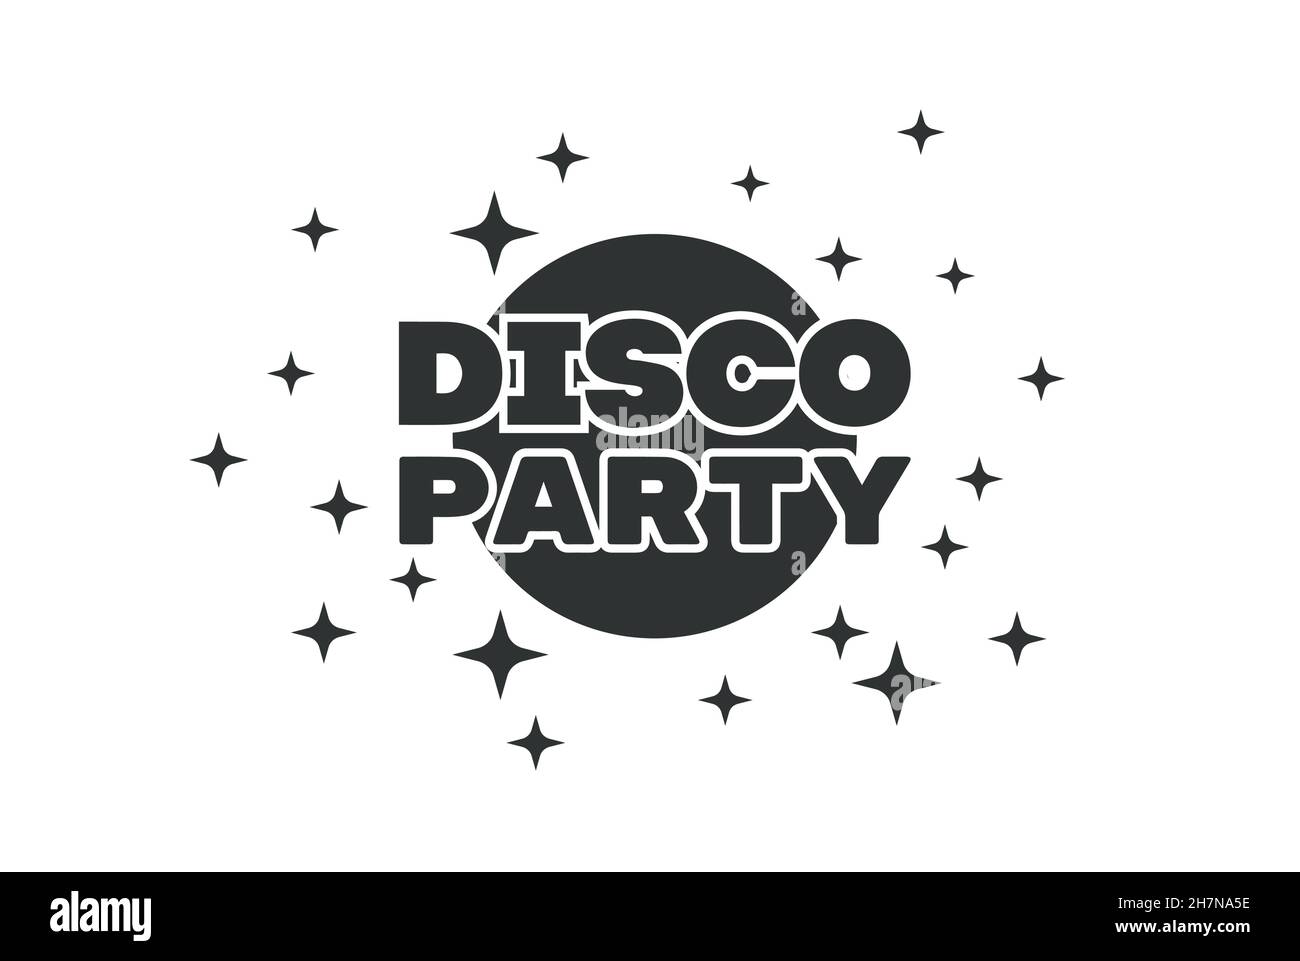 80s party logo